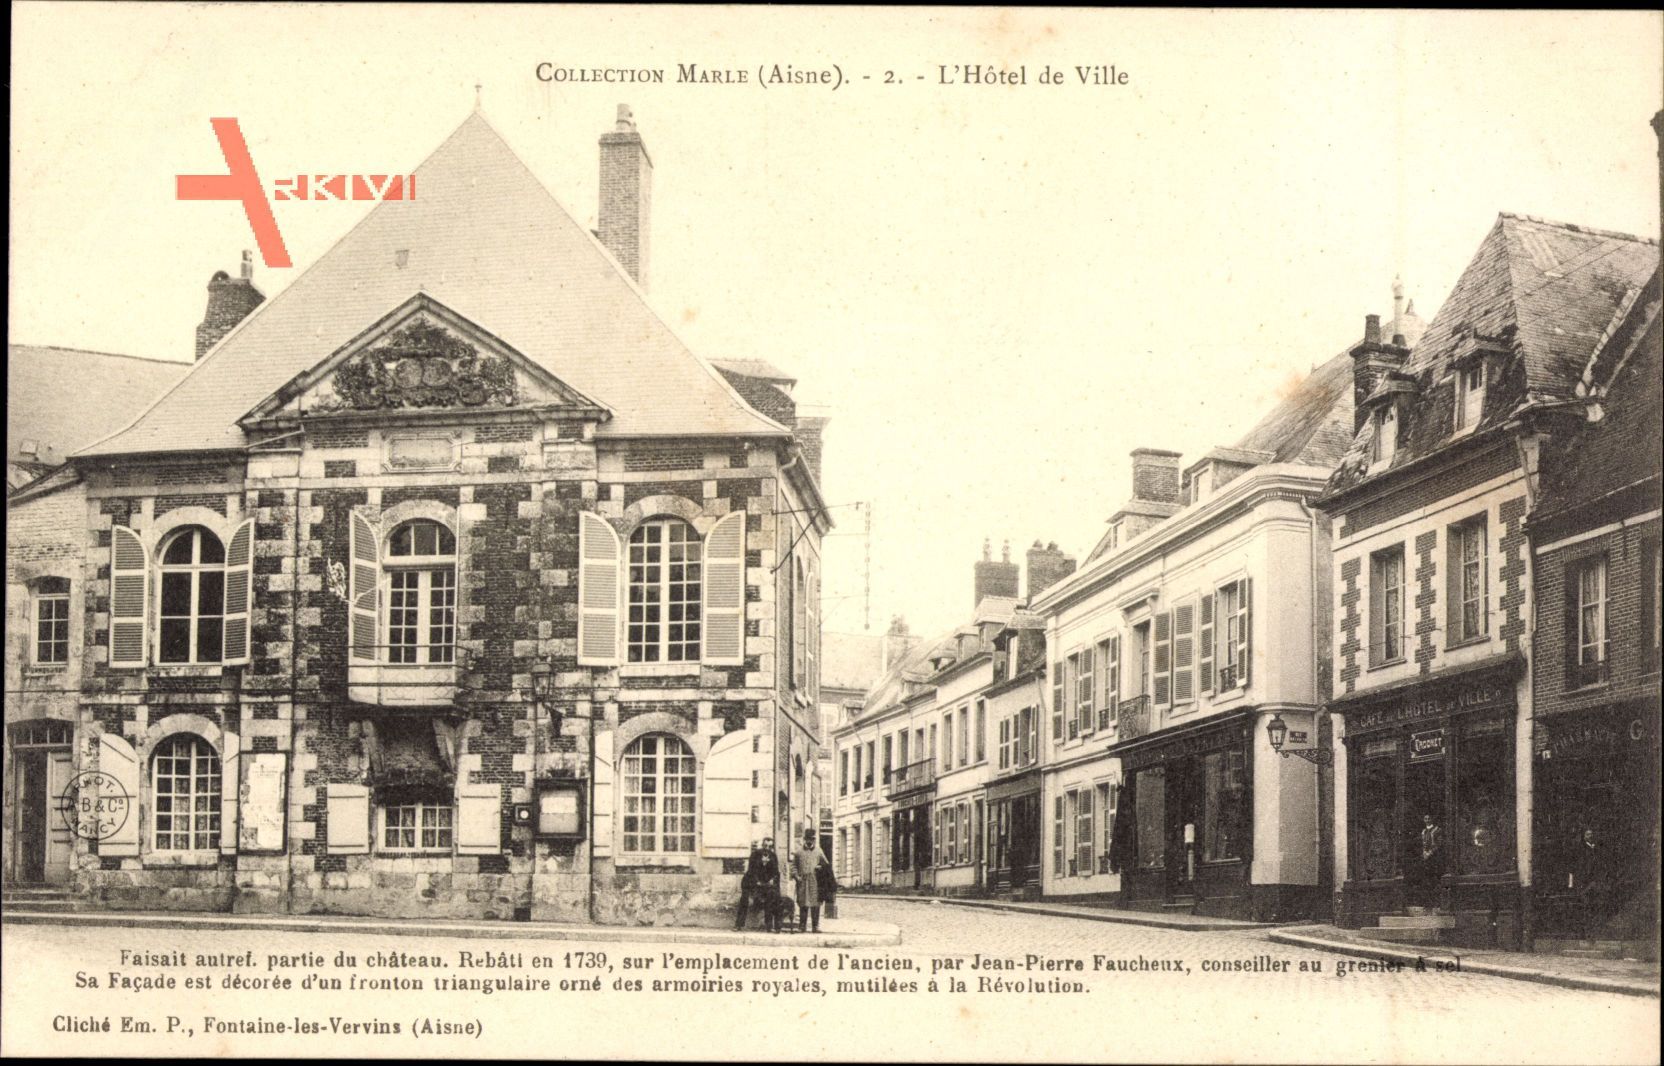 Marle Aisne, L'Hotel de Ville, Blick auf das Rathaus, Geschäfte, Fassade